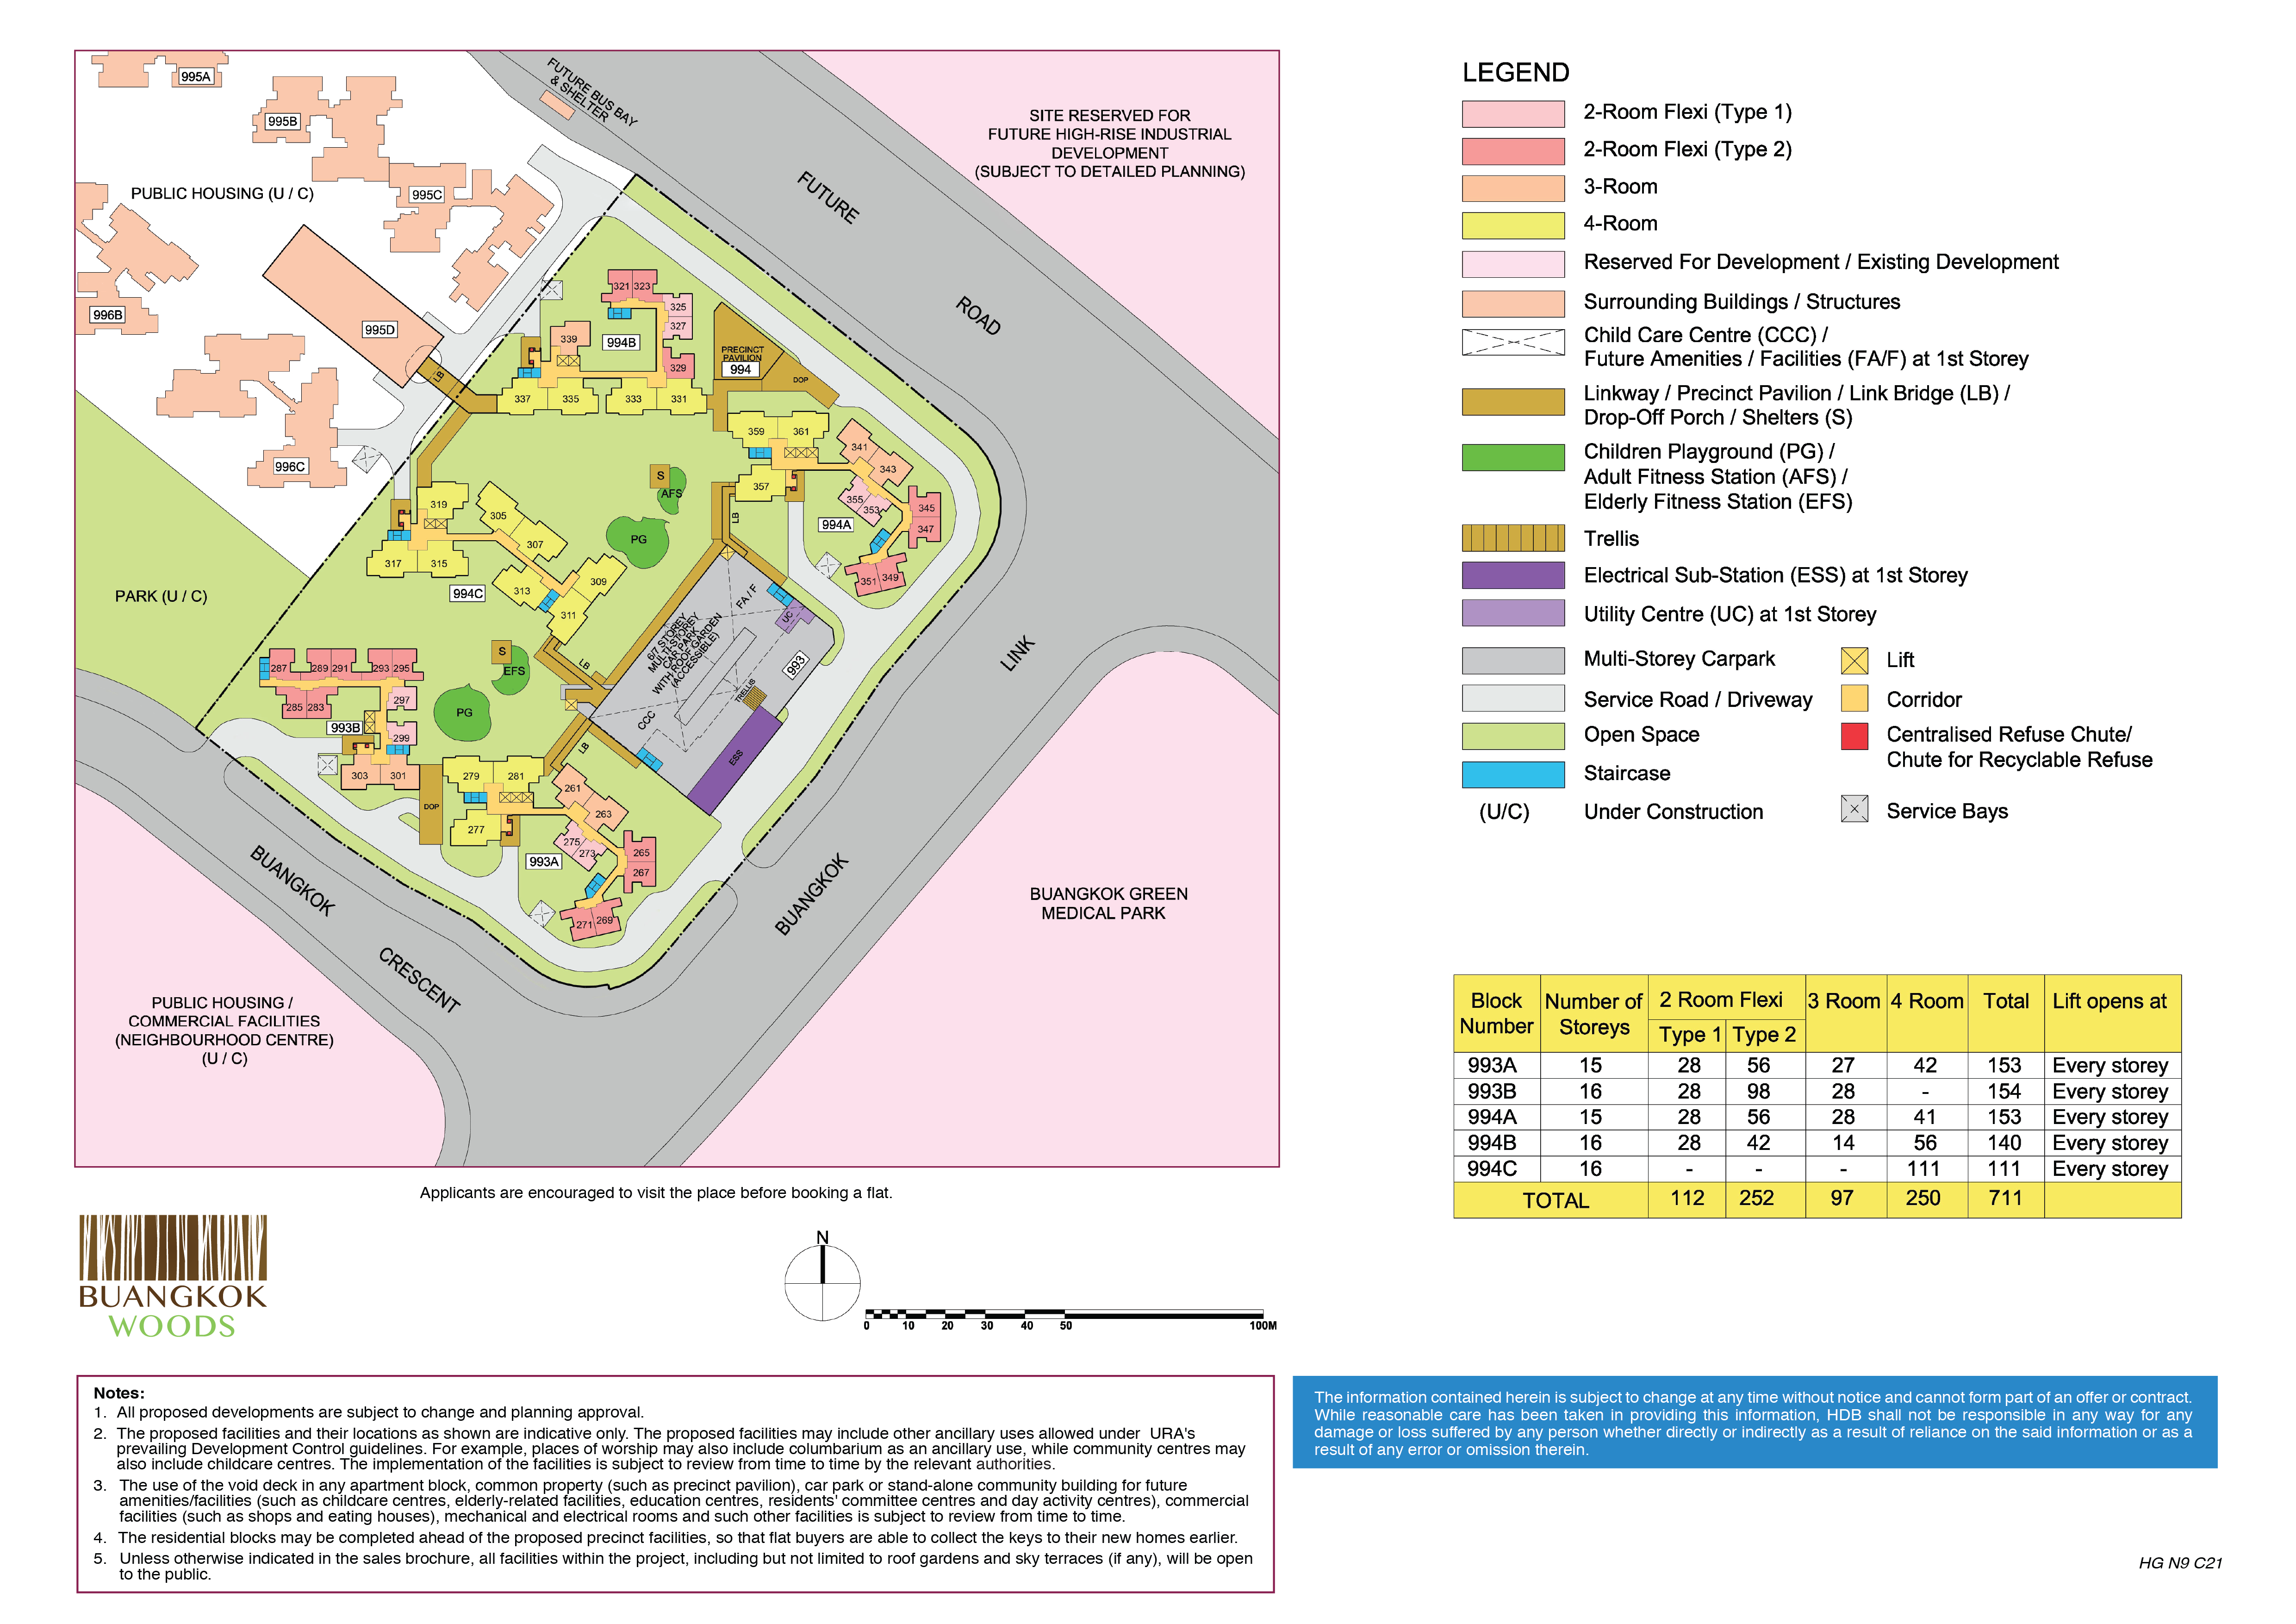 HDB Buangkok Woods - Singapore Property Review - FengShui.Geomancy.Net4961 x 3508